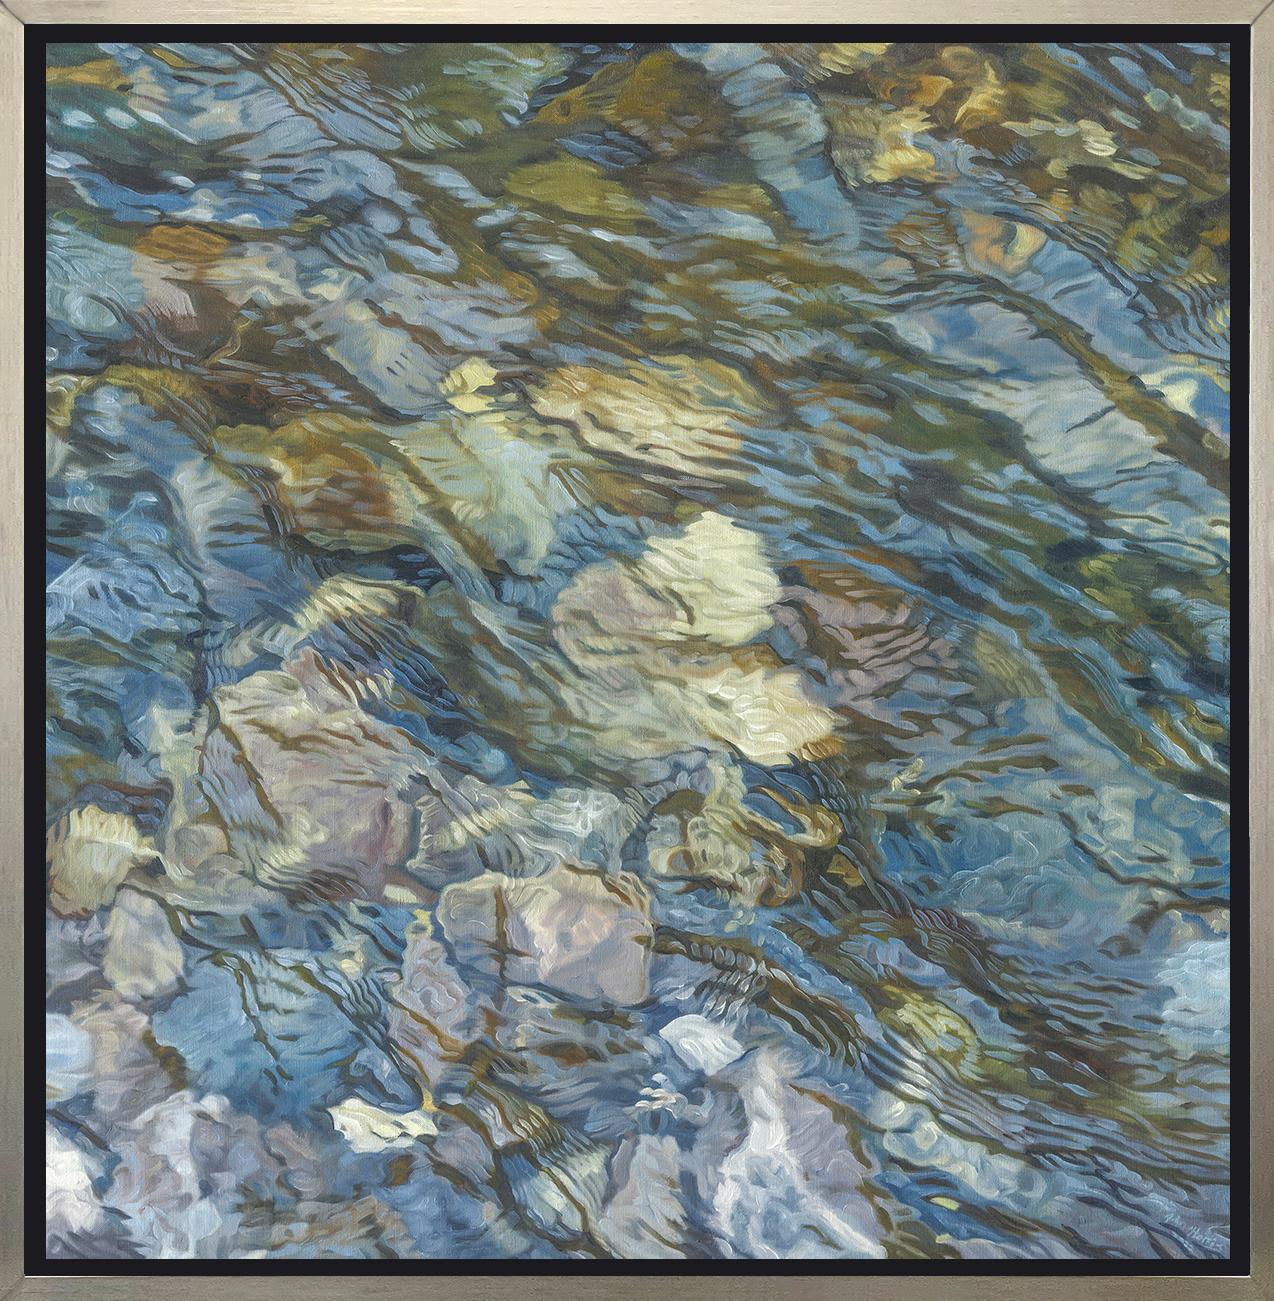 John Harris (painter) Landscape Print - "Riverbed 4, " Framed Limited Edition Giclee Print, 53" x 53"